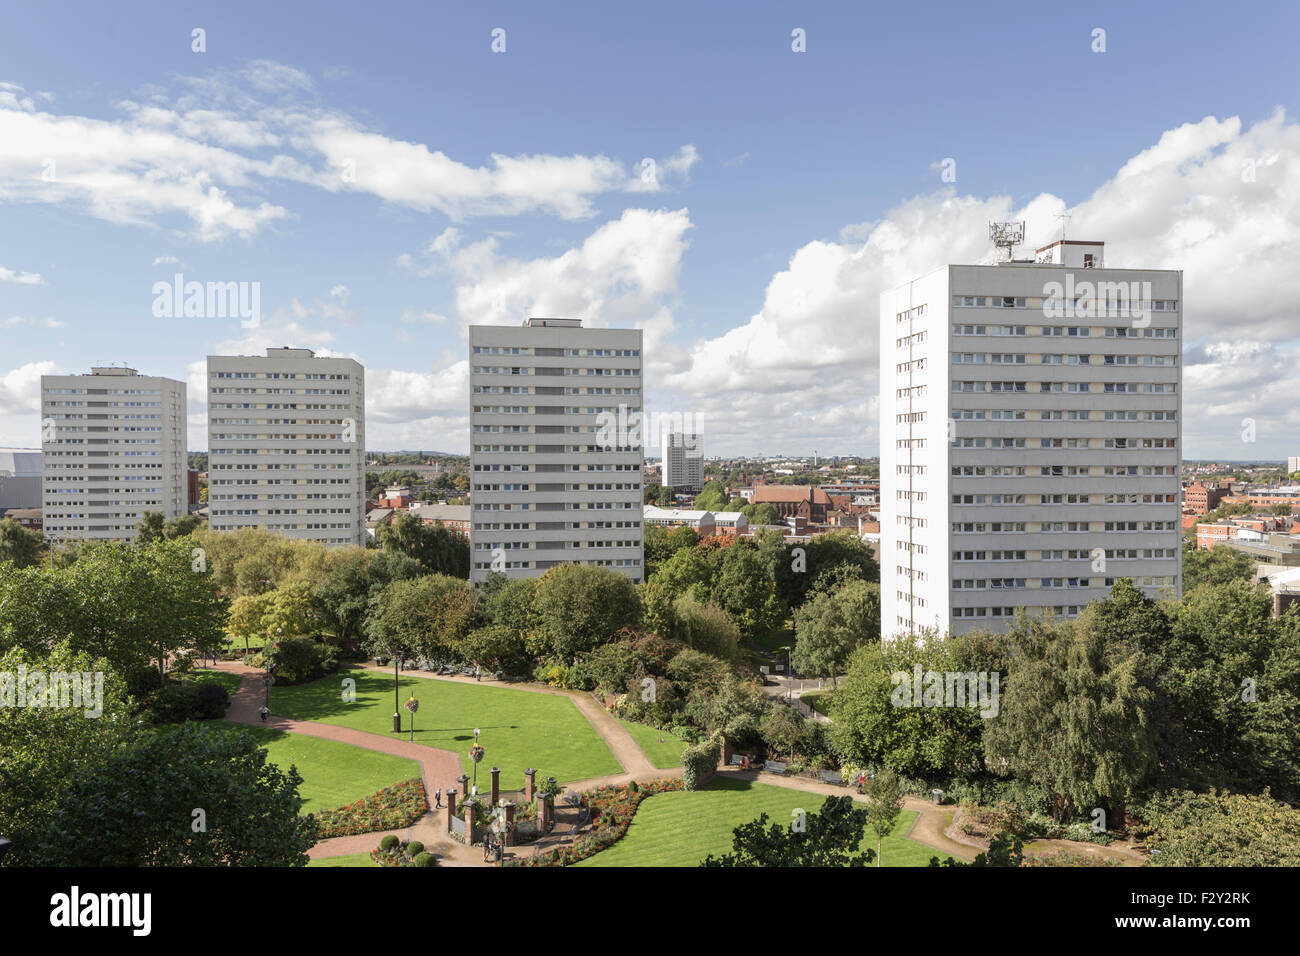 High rise flats in Birmingham, West Midlands, England, UK Stock Photo